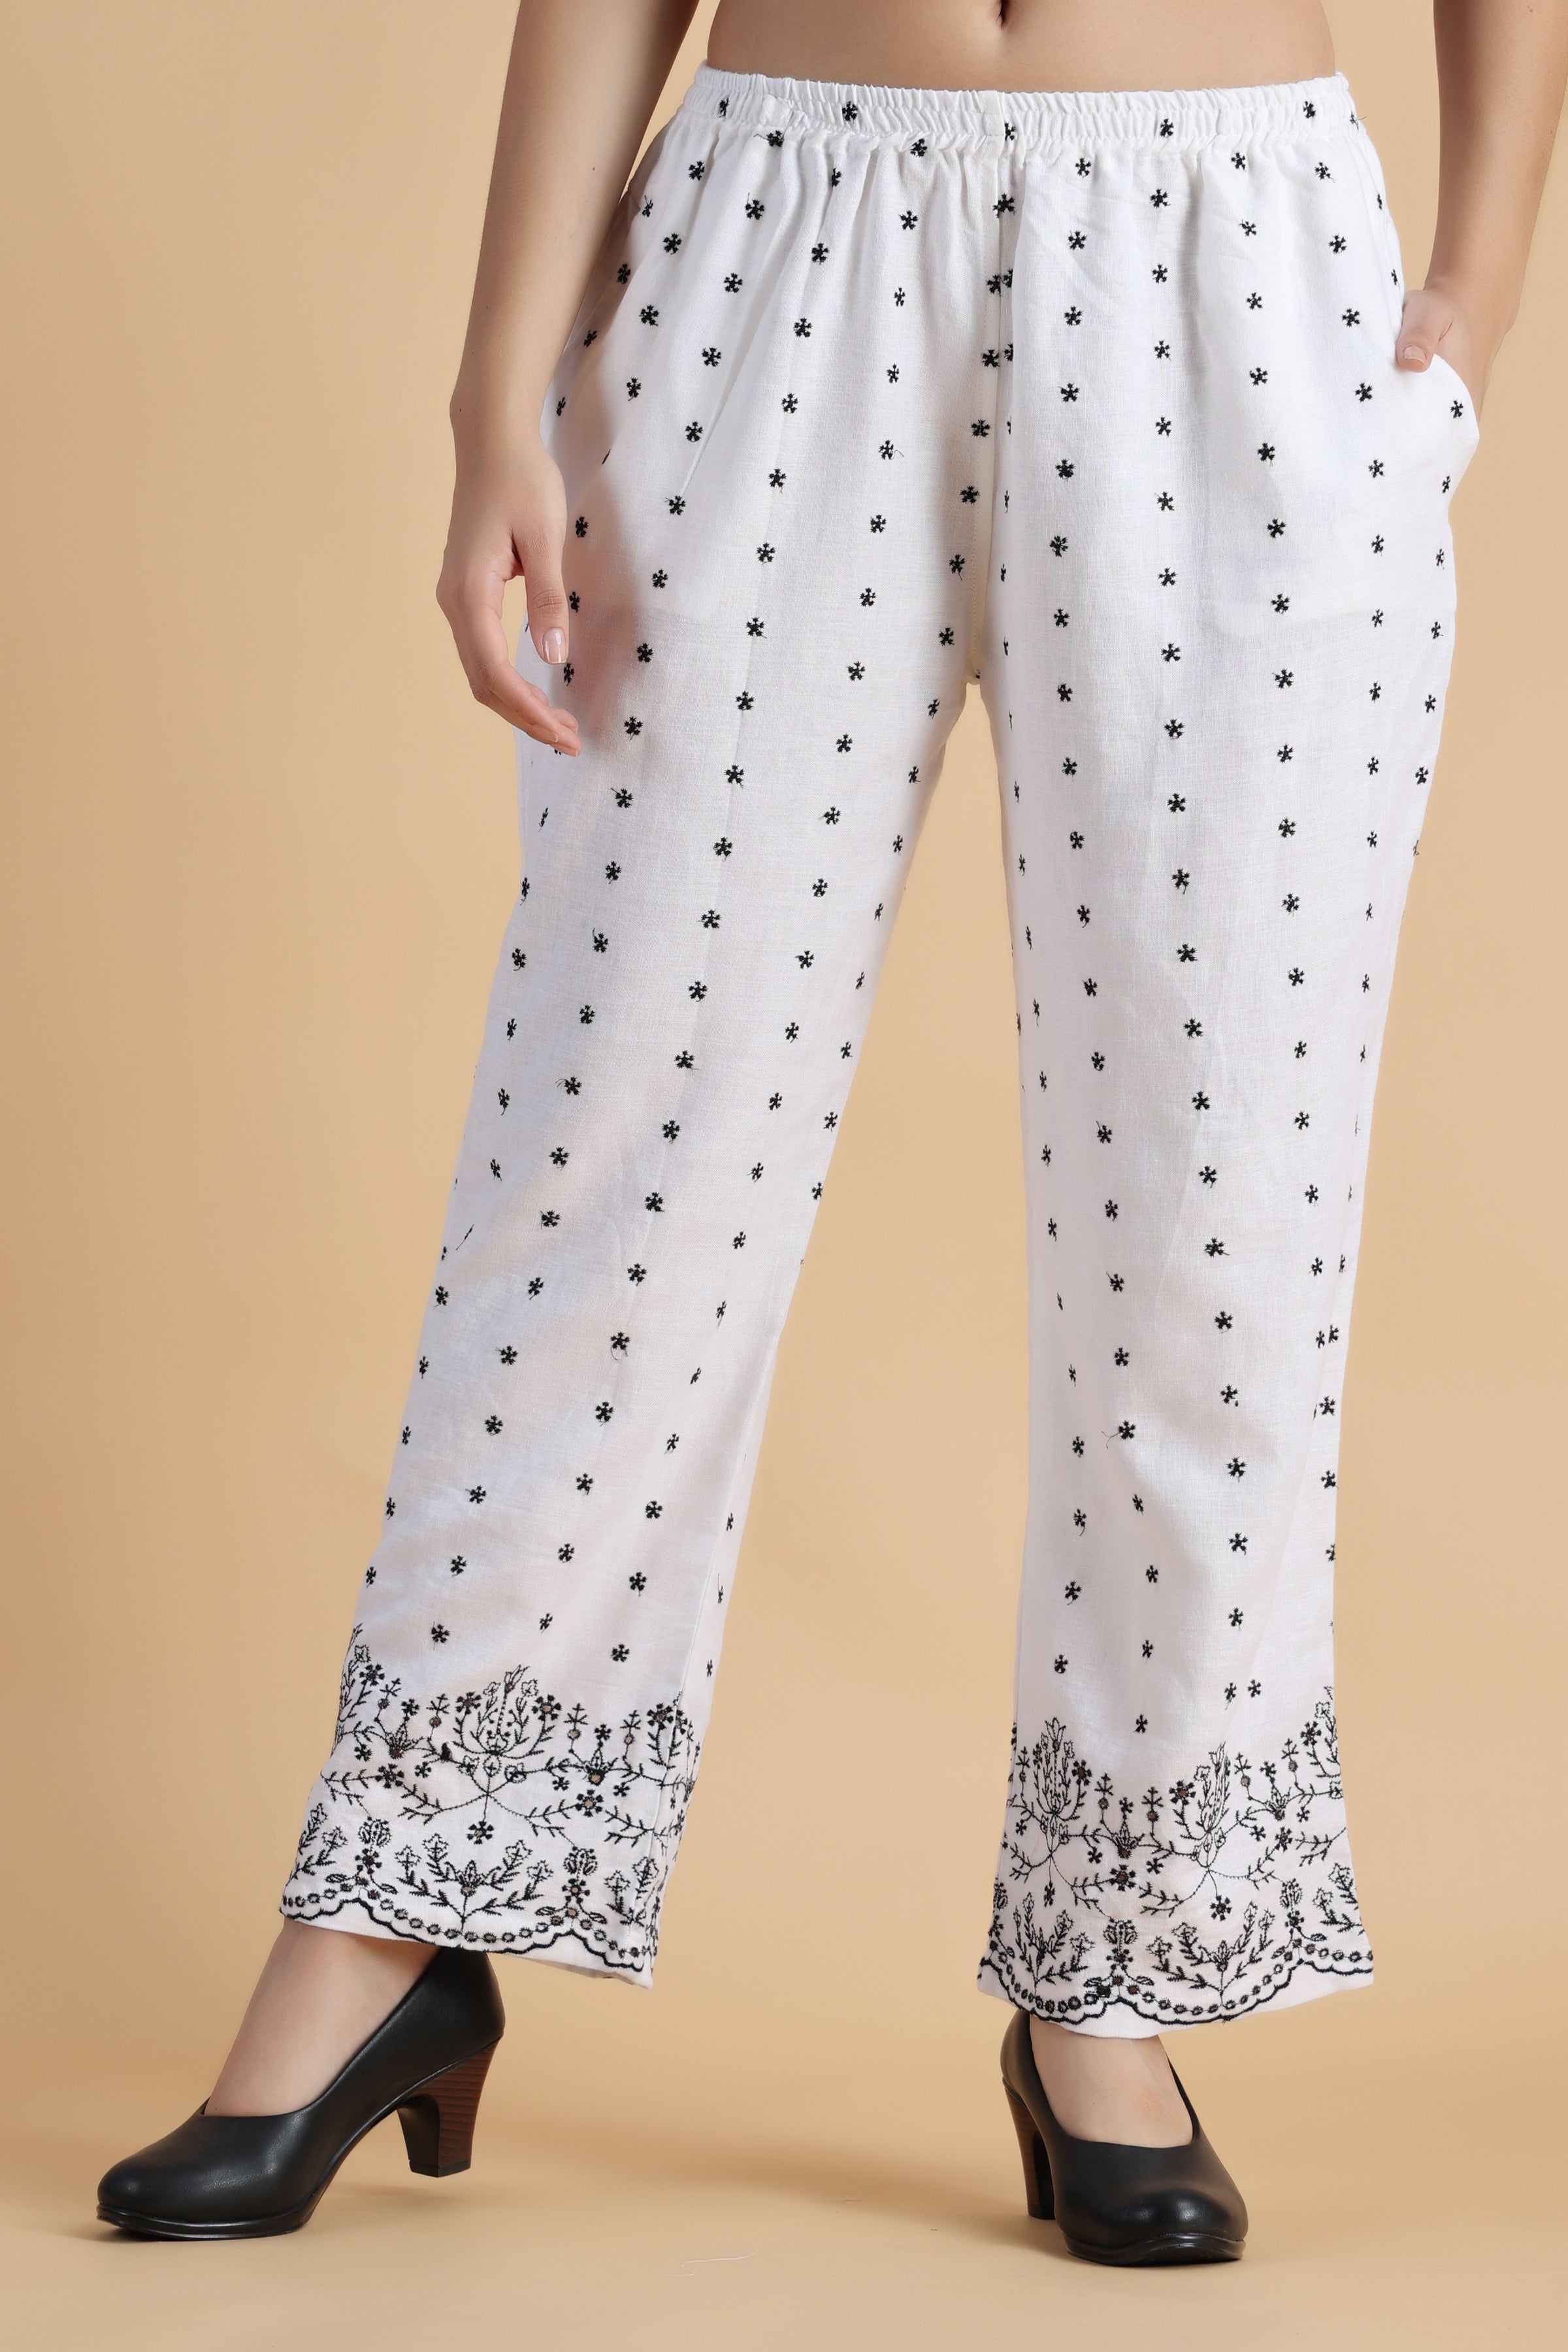 Wide legged palazzo pants pattern by Love Notions.